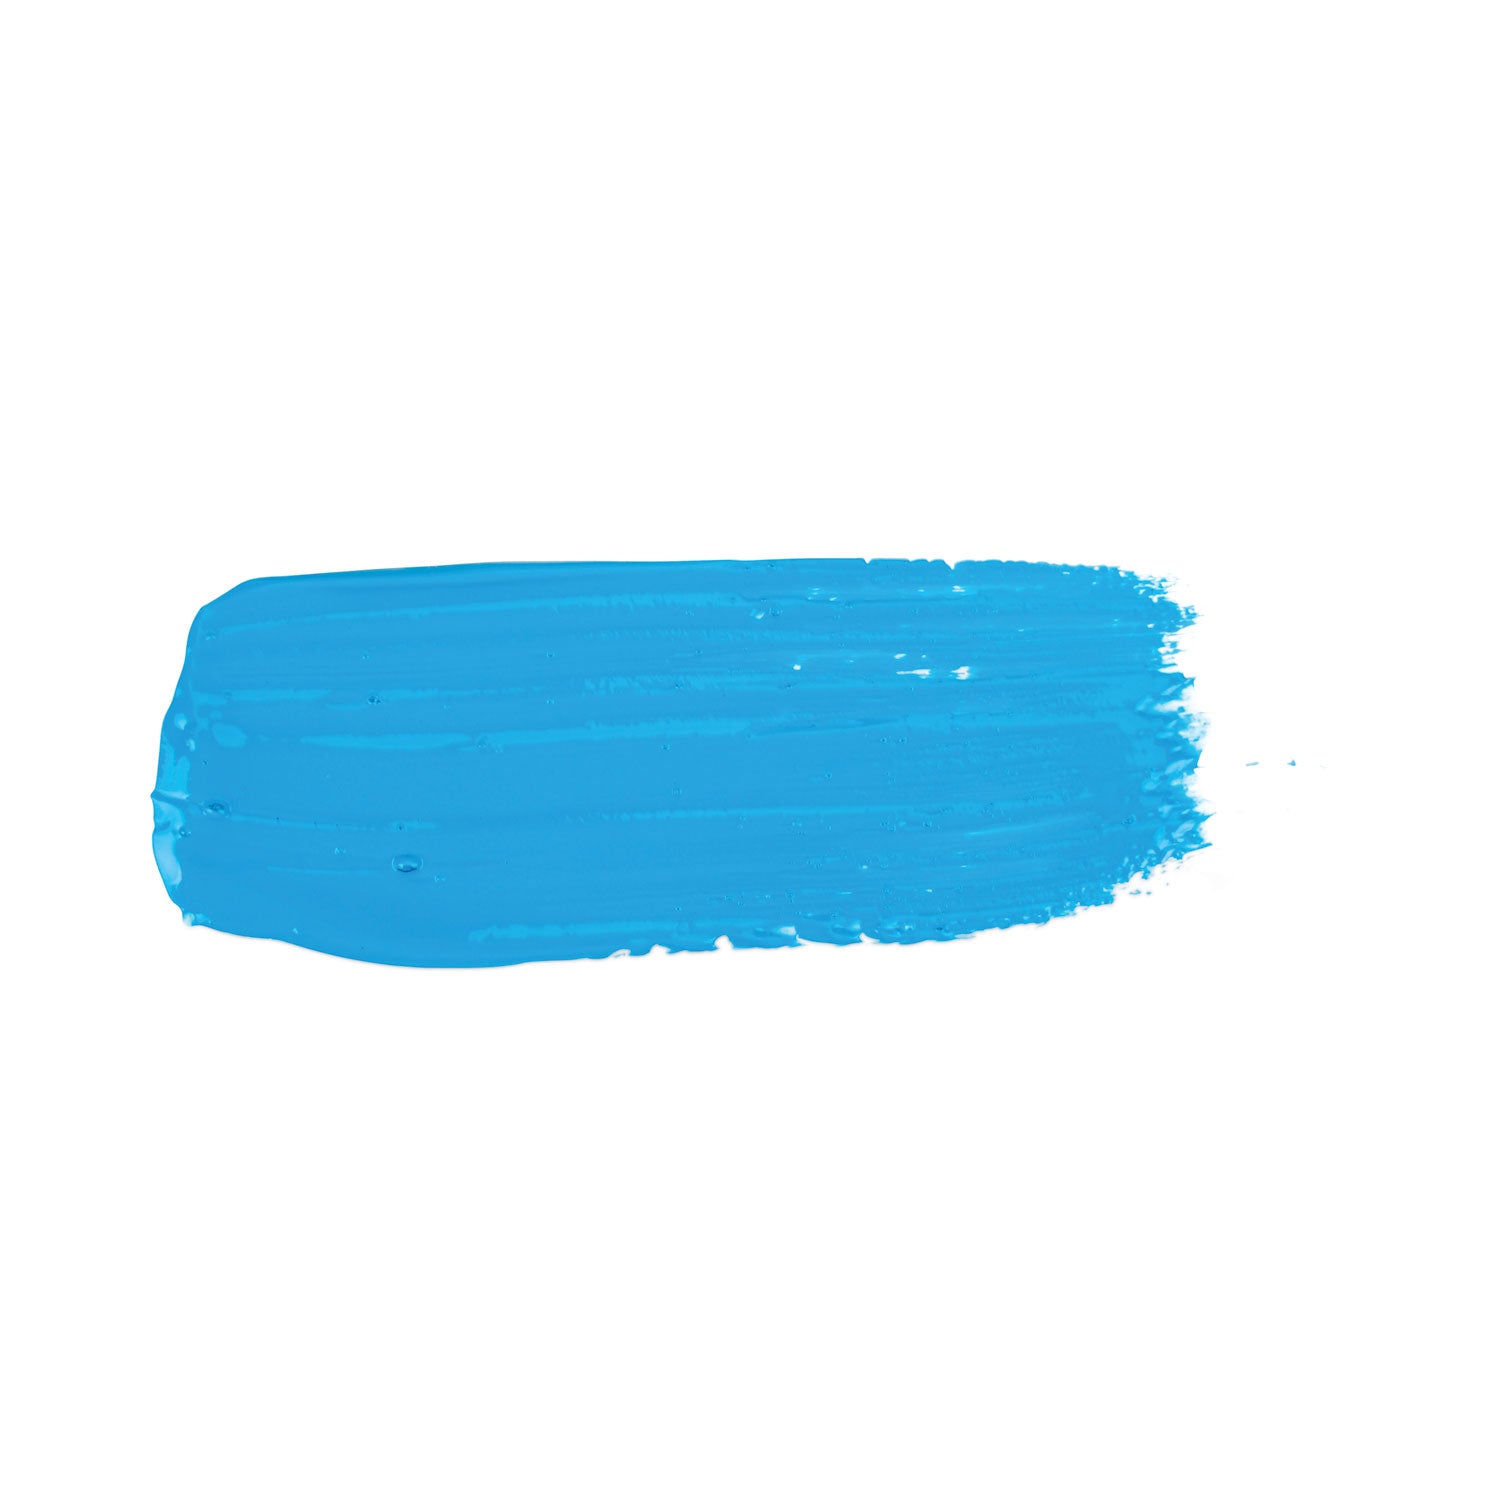 Crayola Portfolio Series Acrylic Paint - 16 fl oz - 1 Each - Brilliant Blue - 4